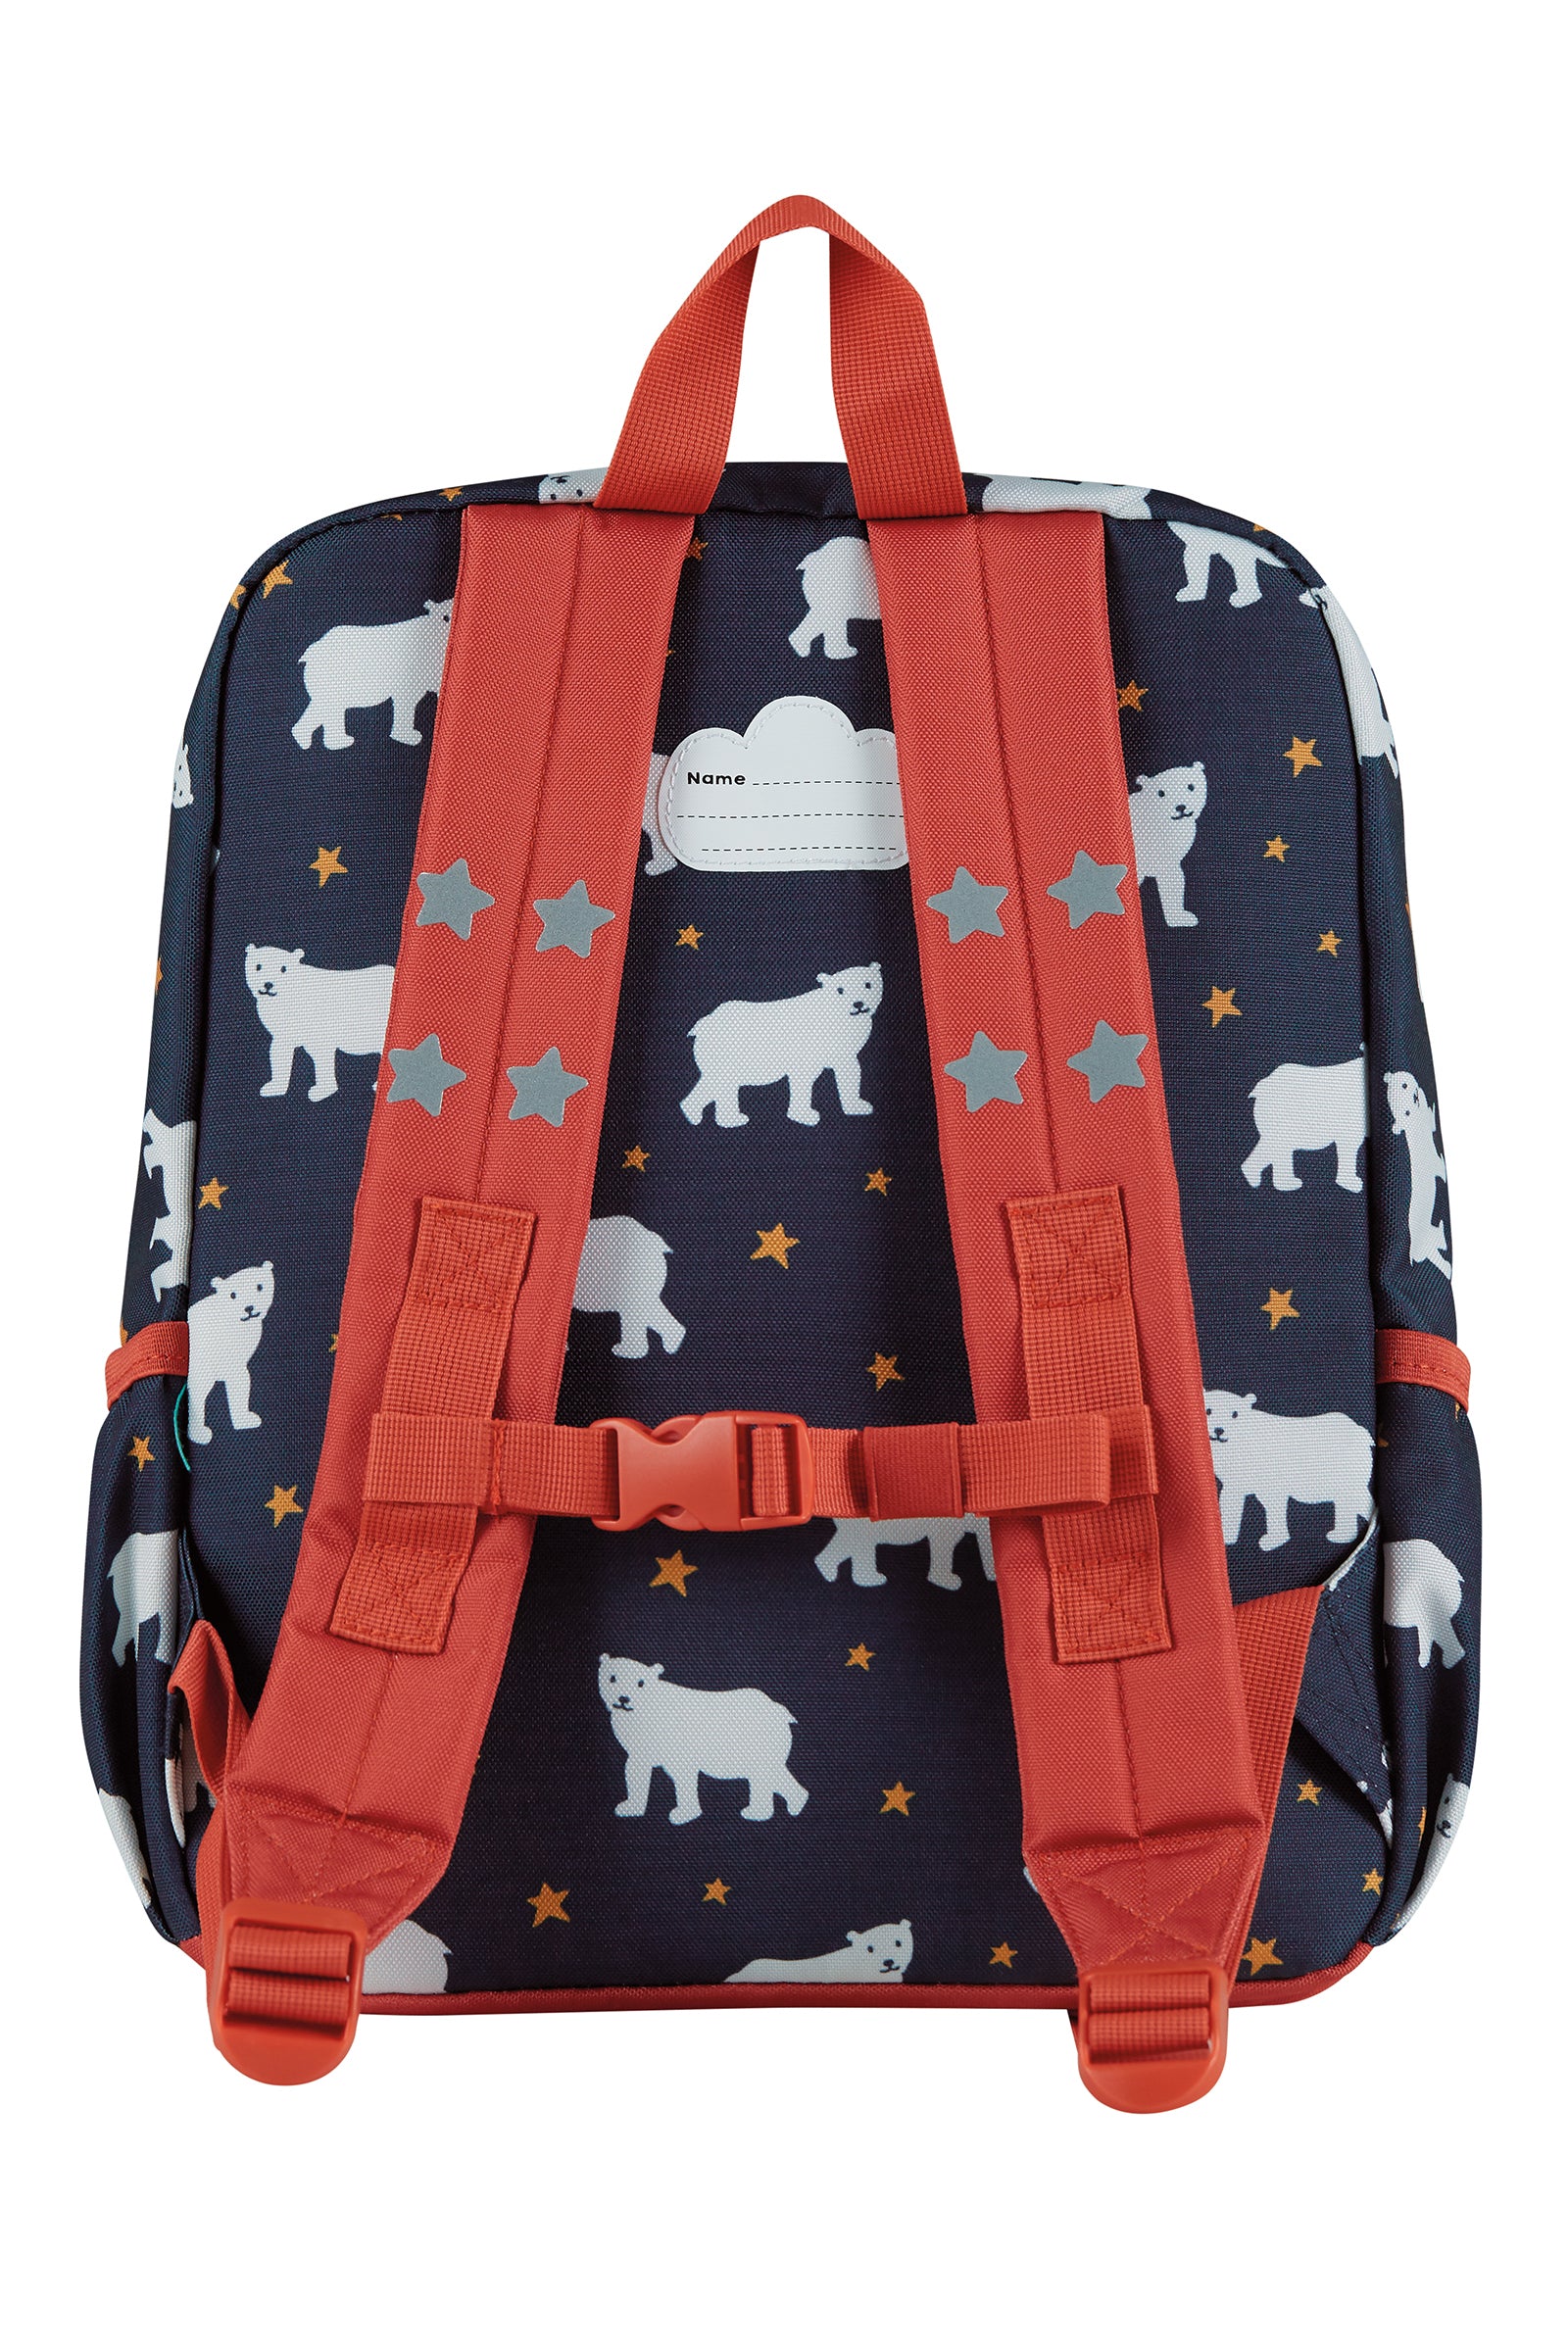 Frugi Adventurers Backpack - Polar Bears